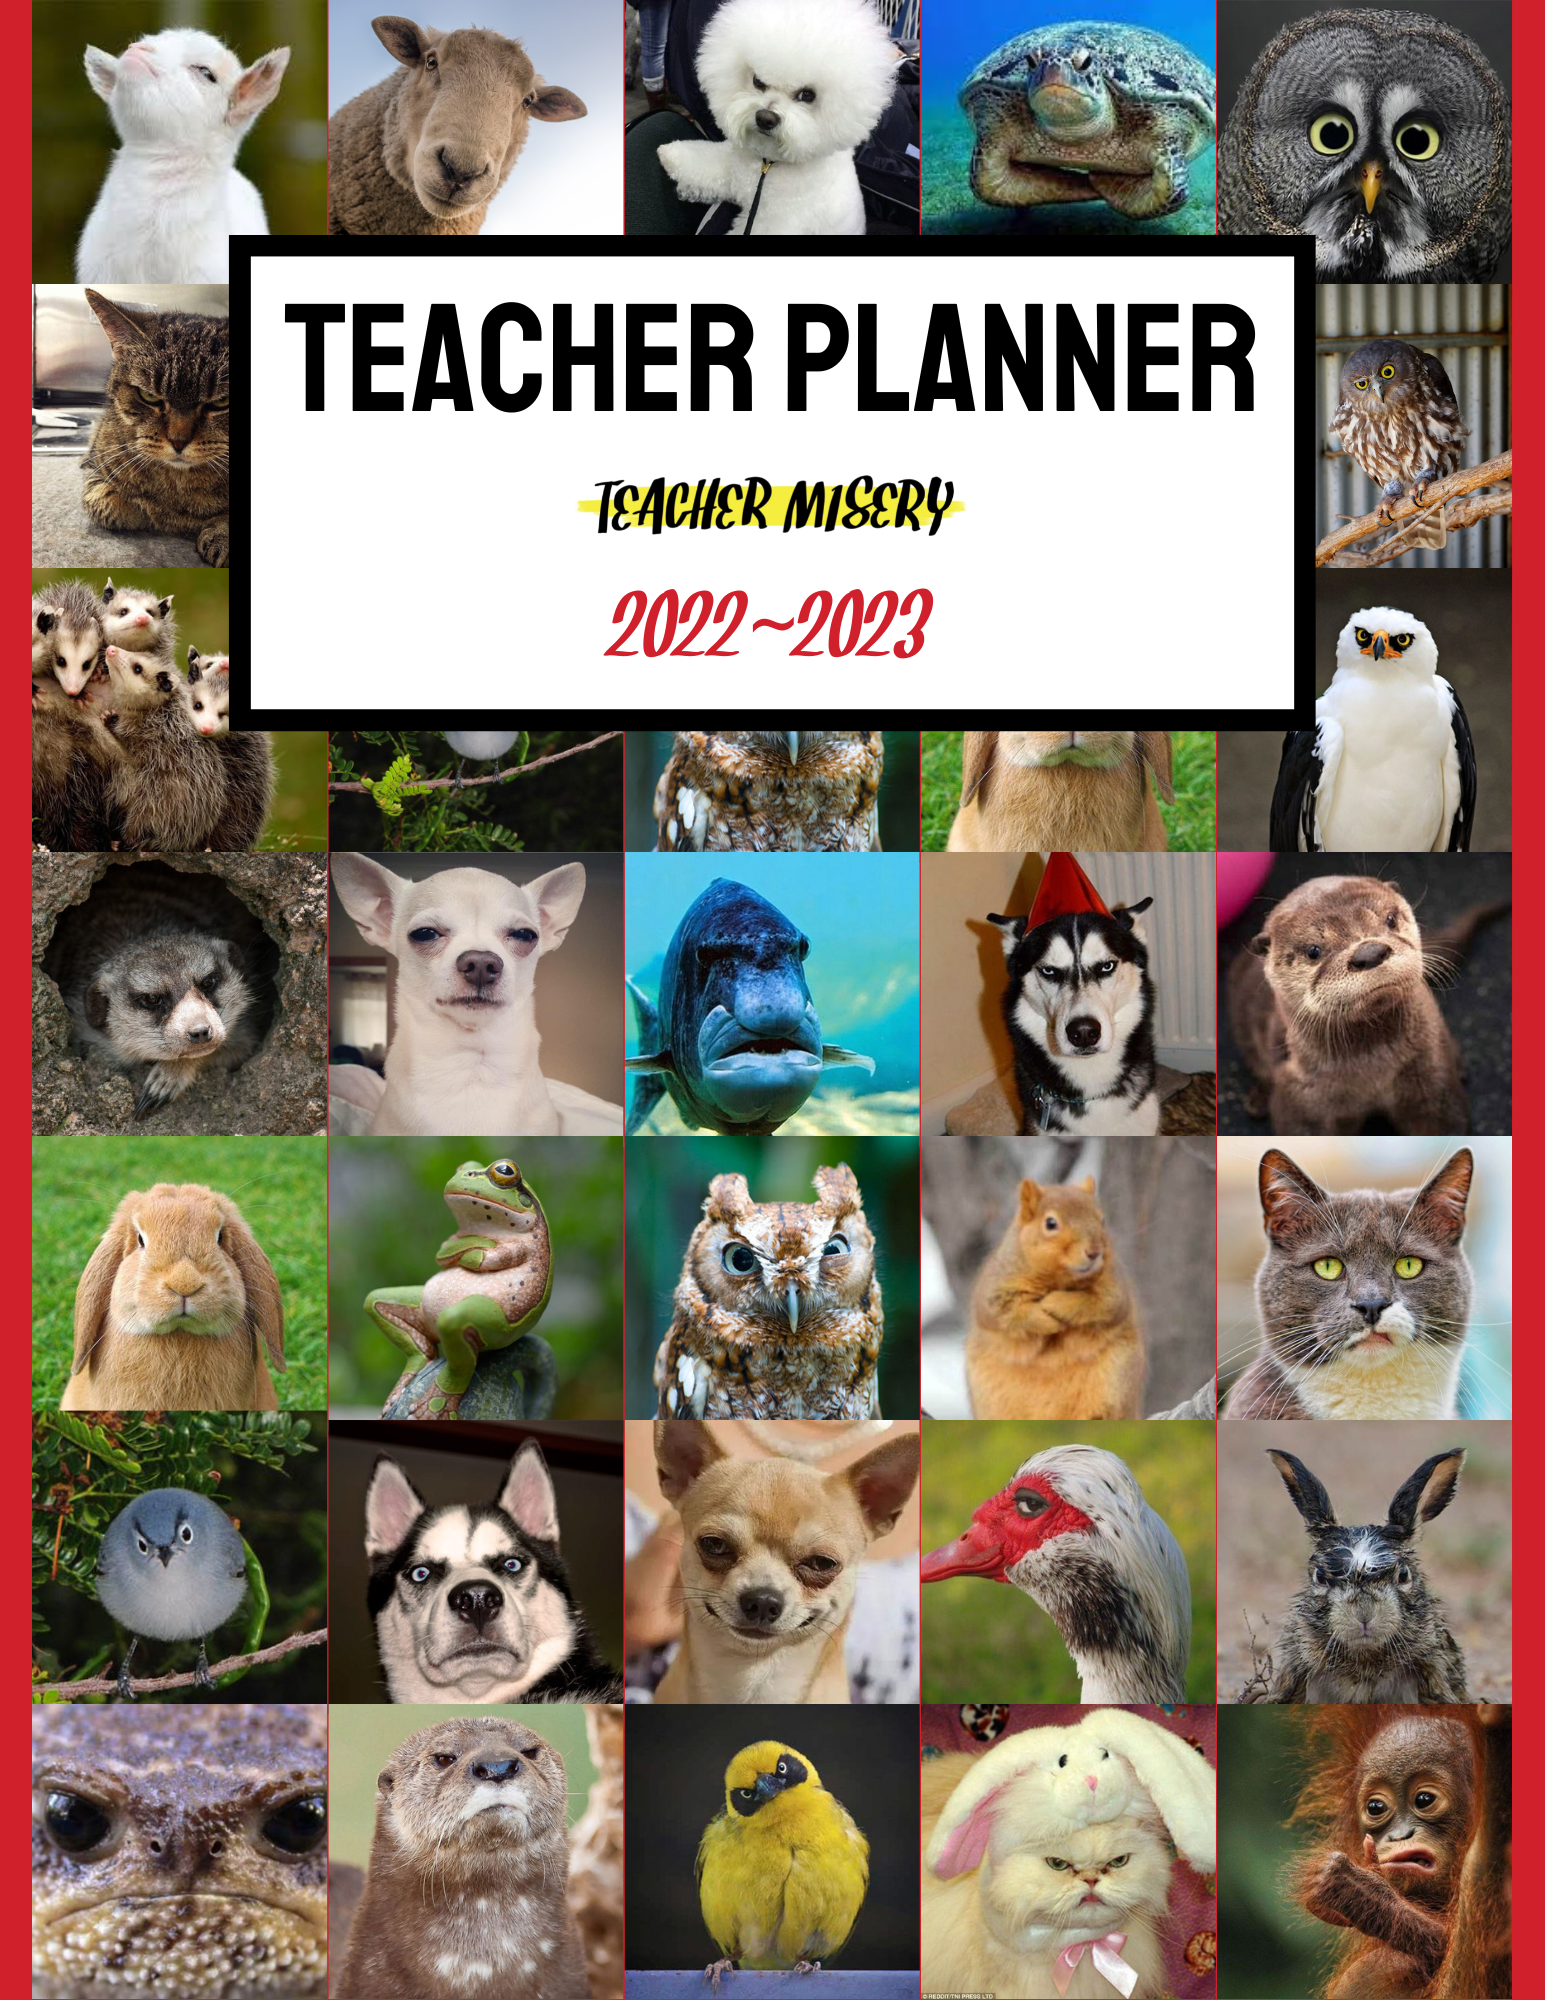 Teacher Misery teacher planner 2022-2023.